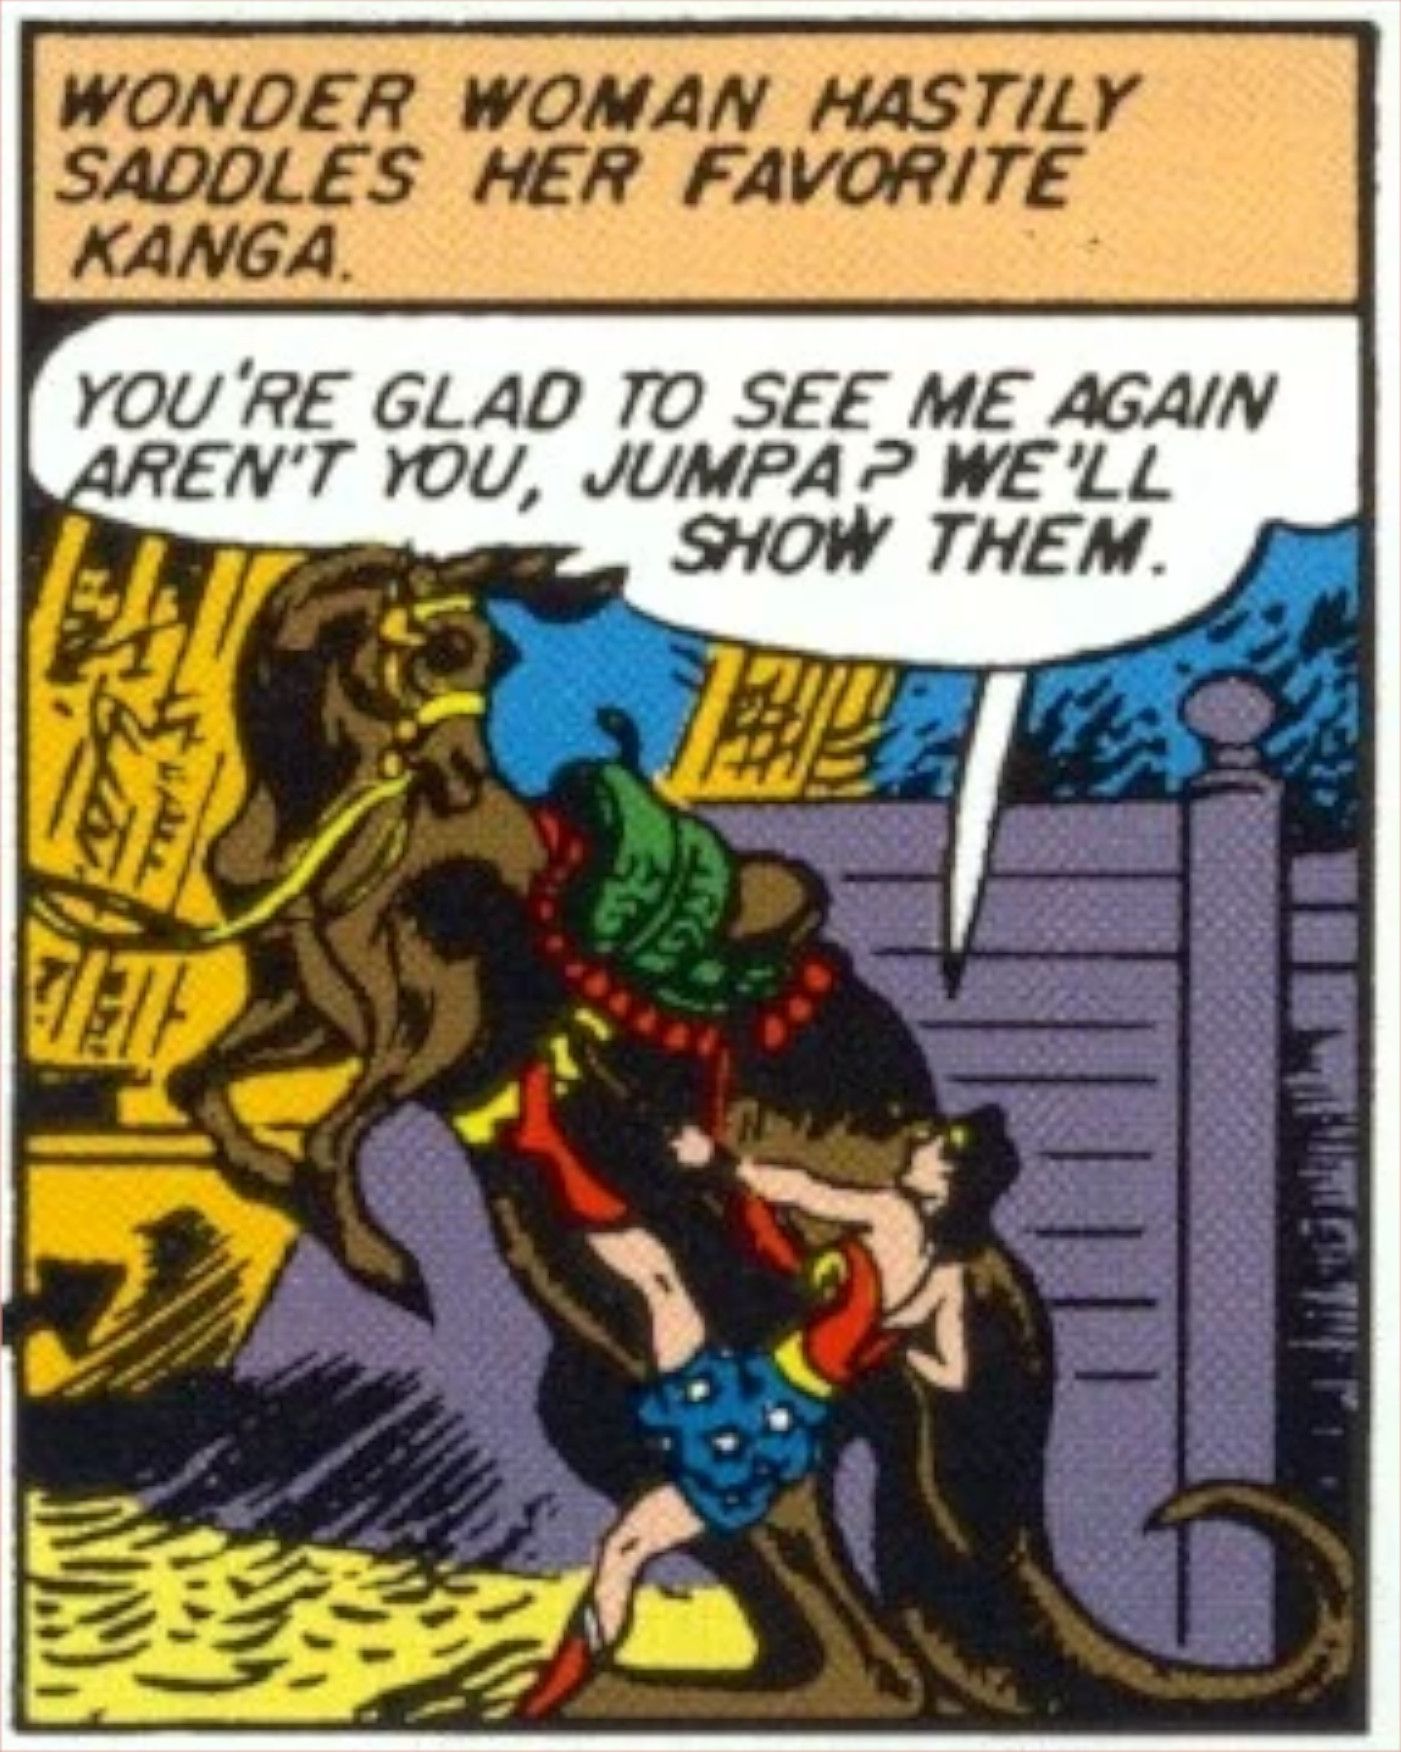 Comic book panel: Wonder Woman saddles Jumpa, a kangaroo like creature.